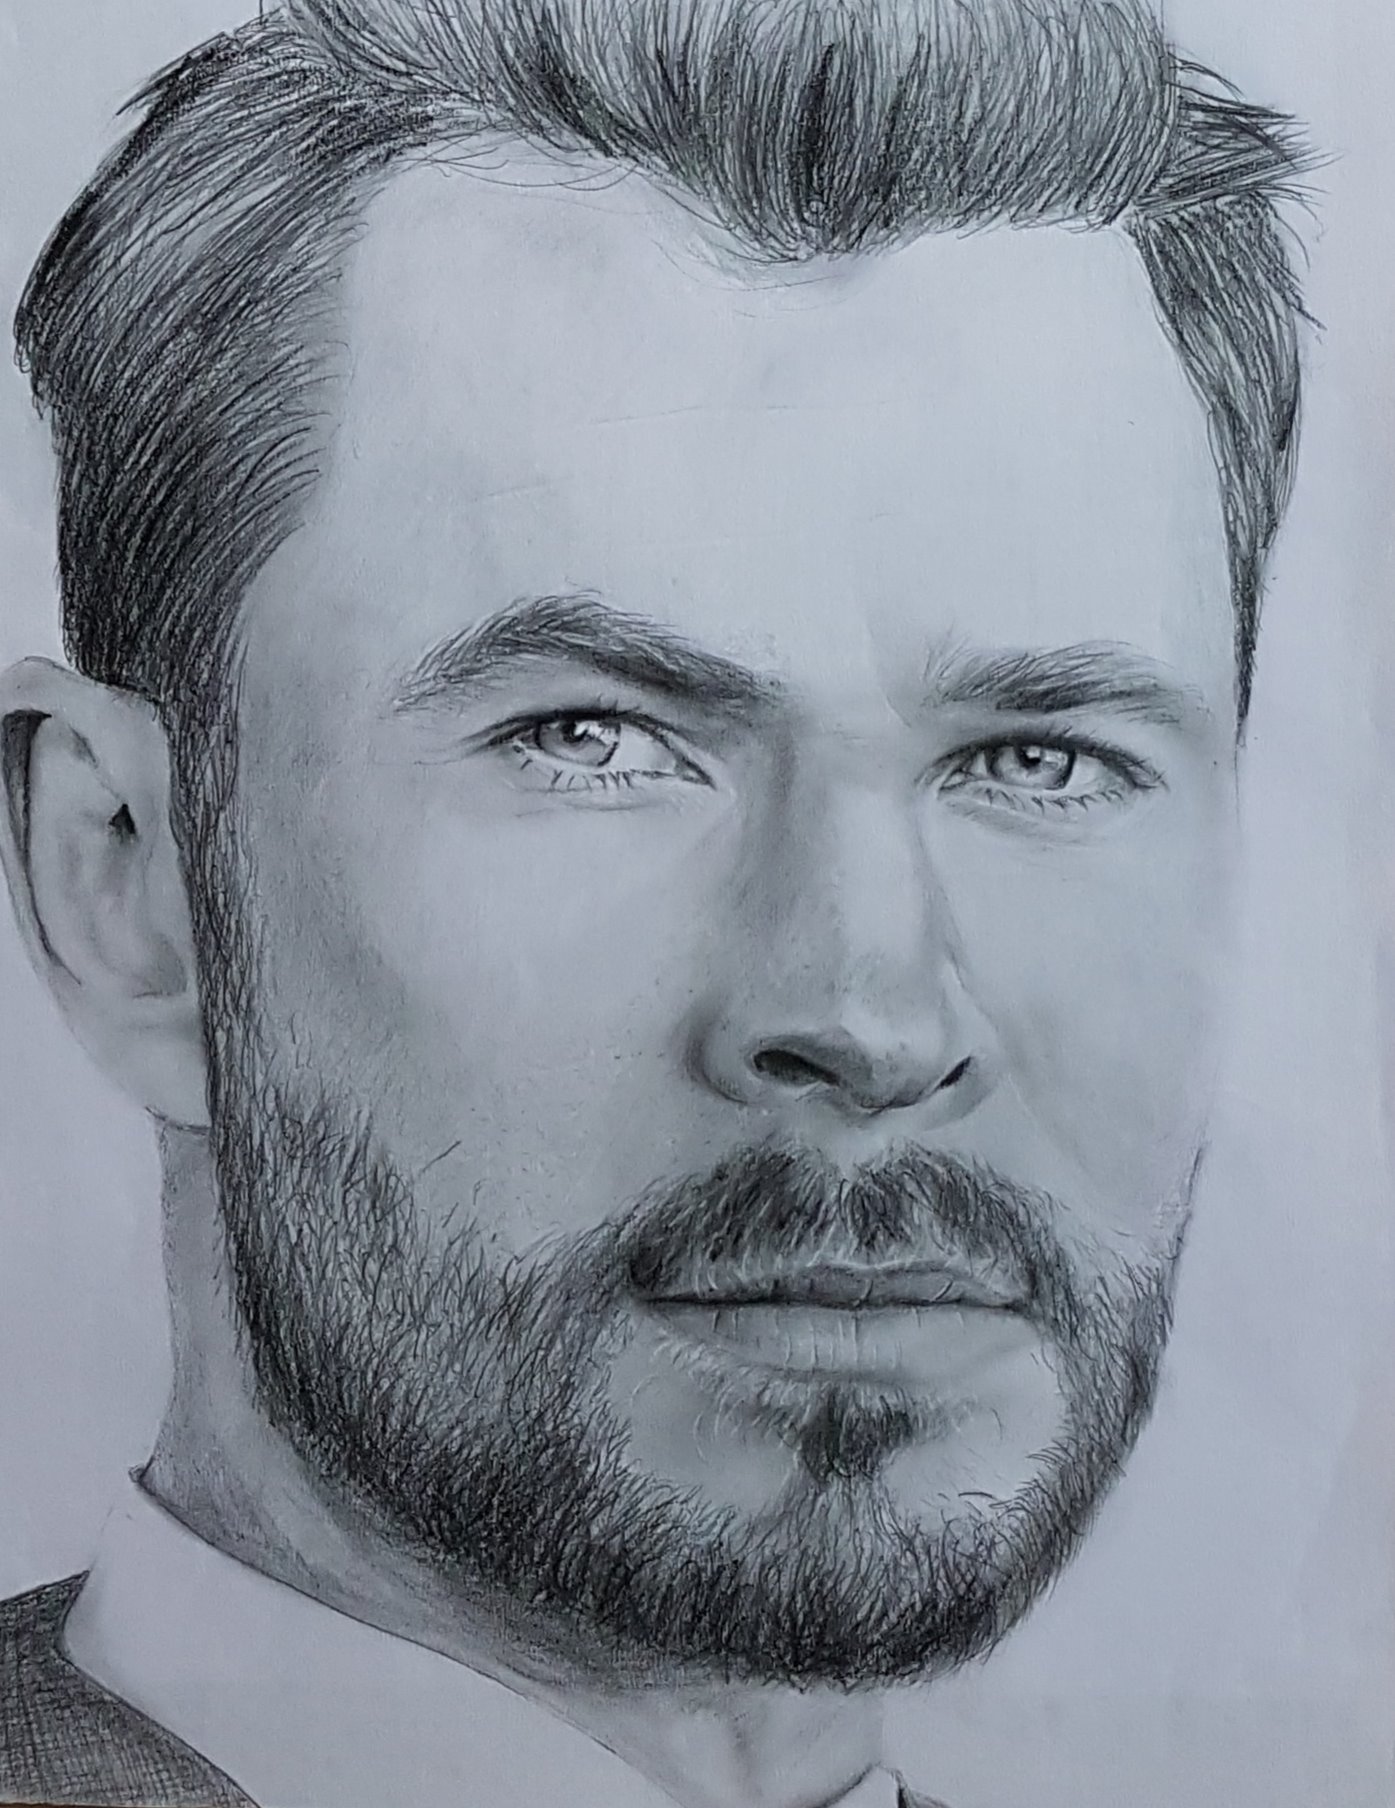 Timelapse - Chris Hemsworth (Thor) Vector Portrait Drawing. Corel Draw X7 -  YouTube